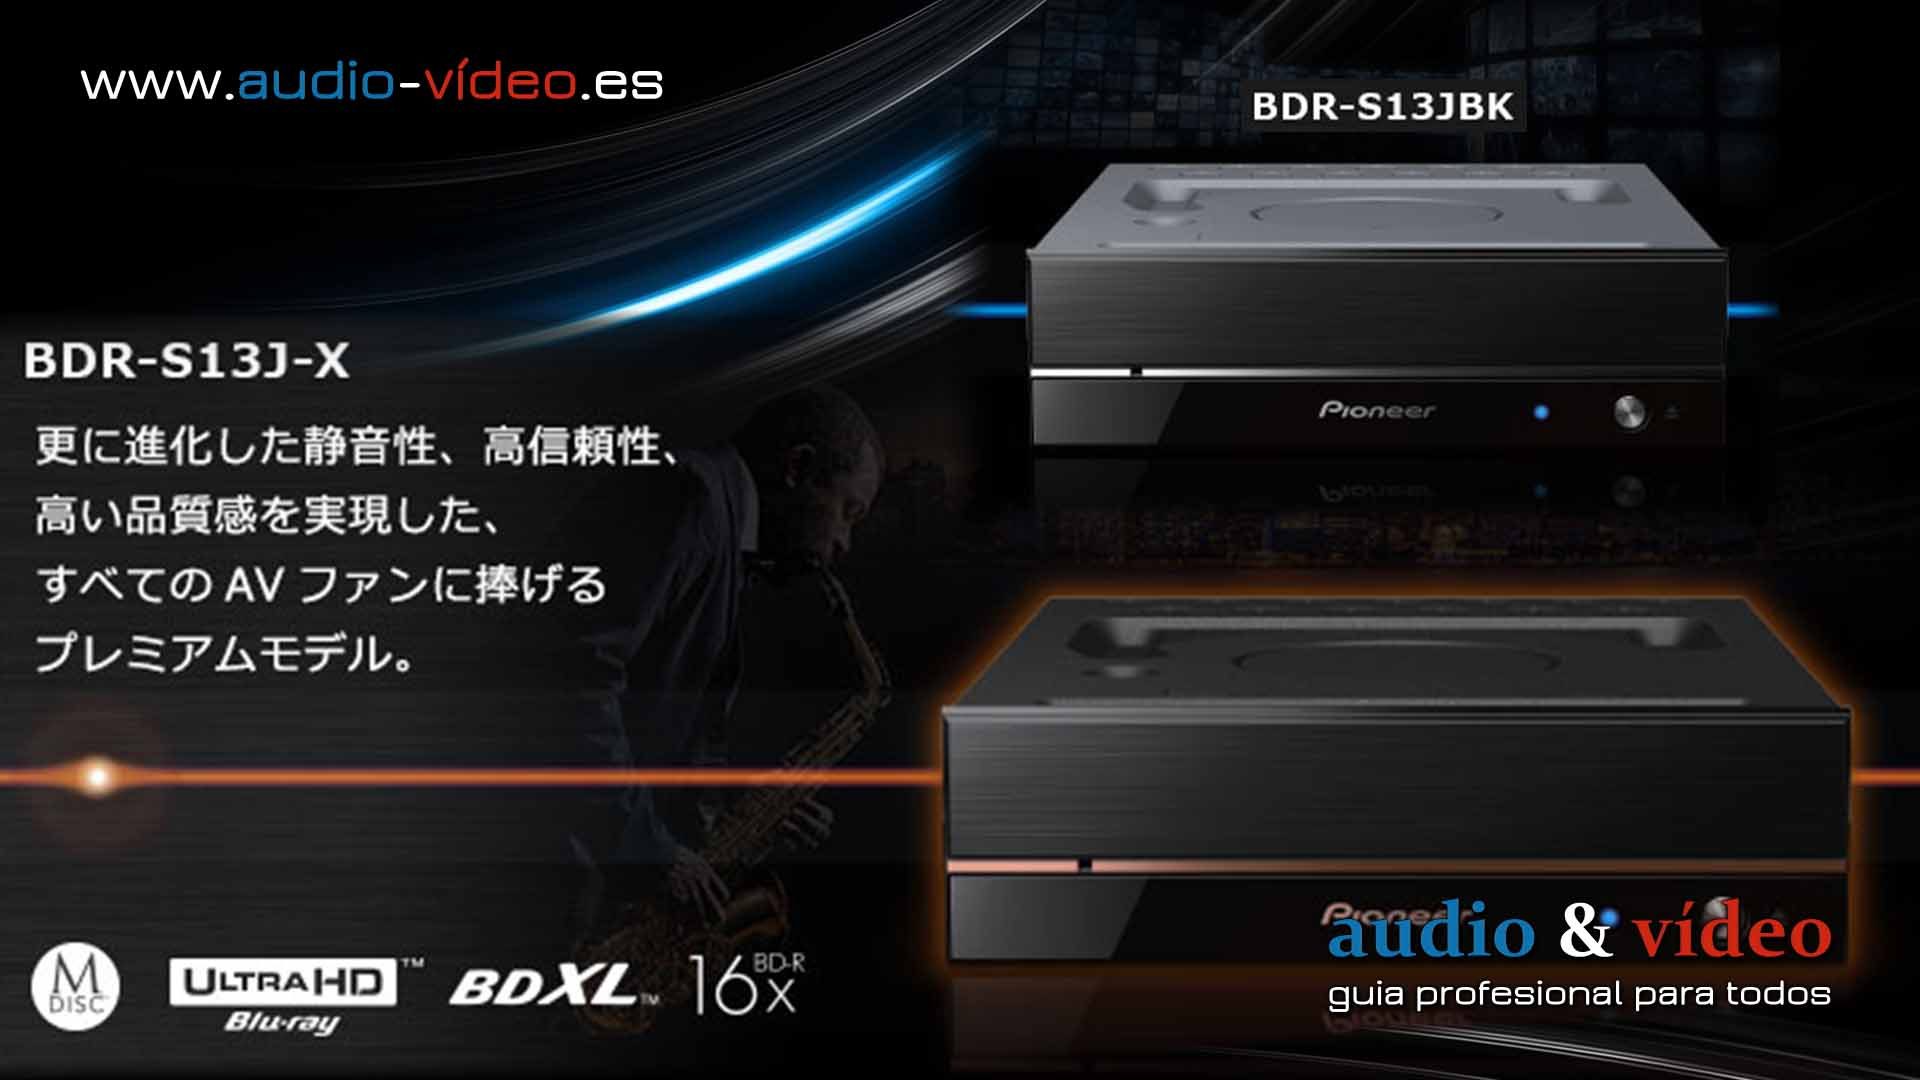 Pioneer BDR-S13J-X y BDR-S13JBK – grabadora – Ultra HD Blu-ray